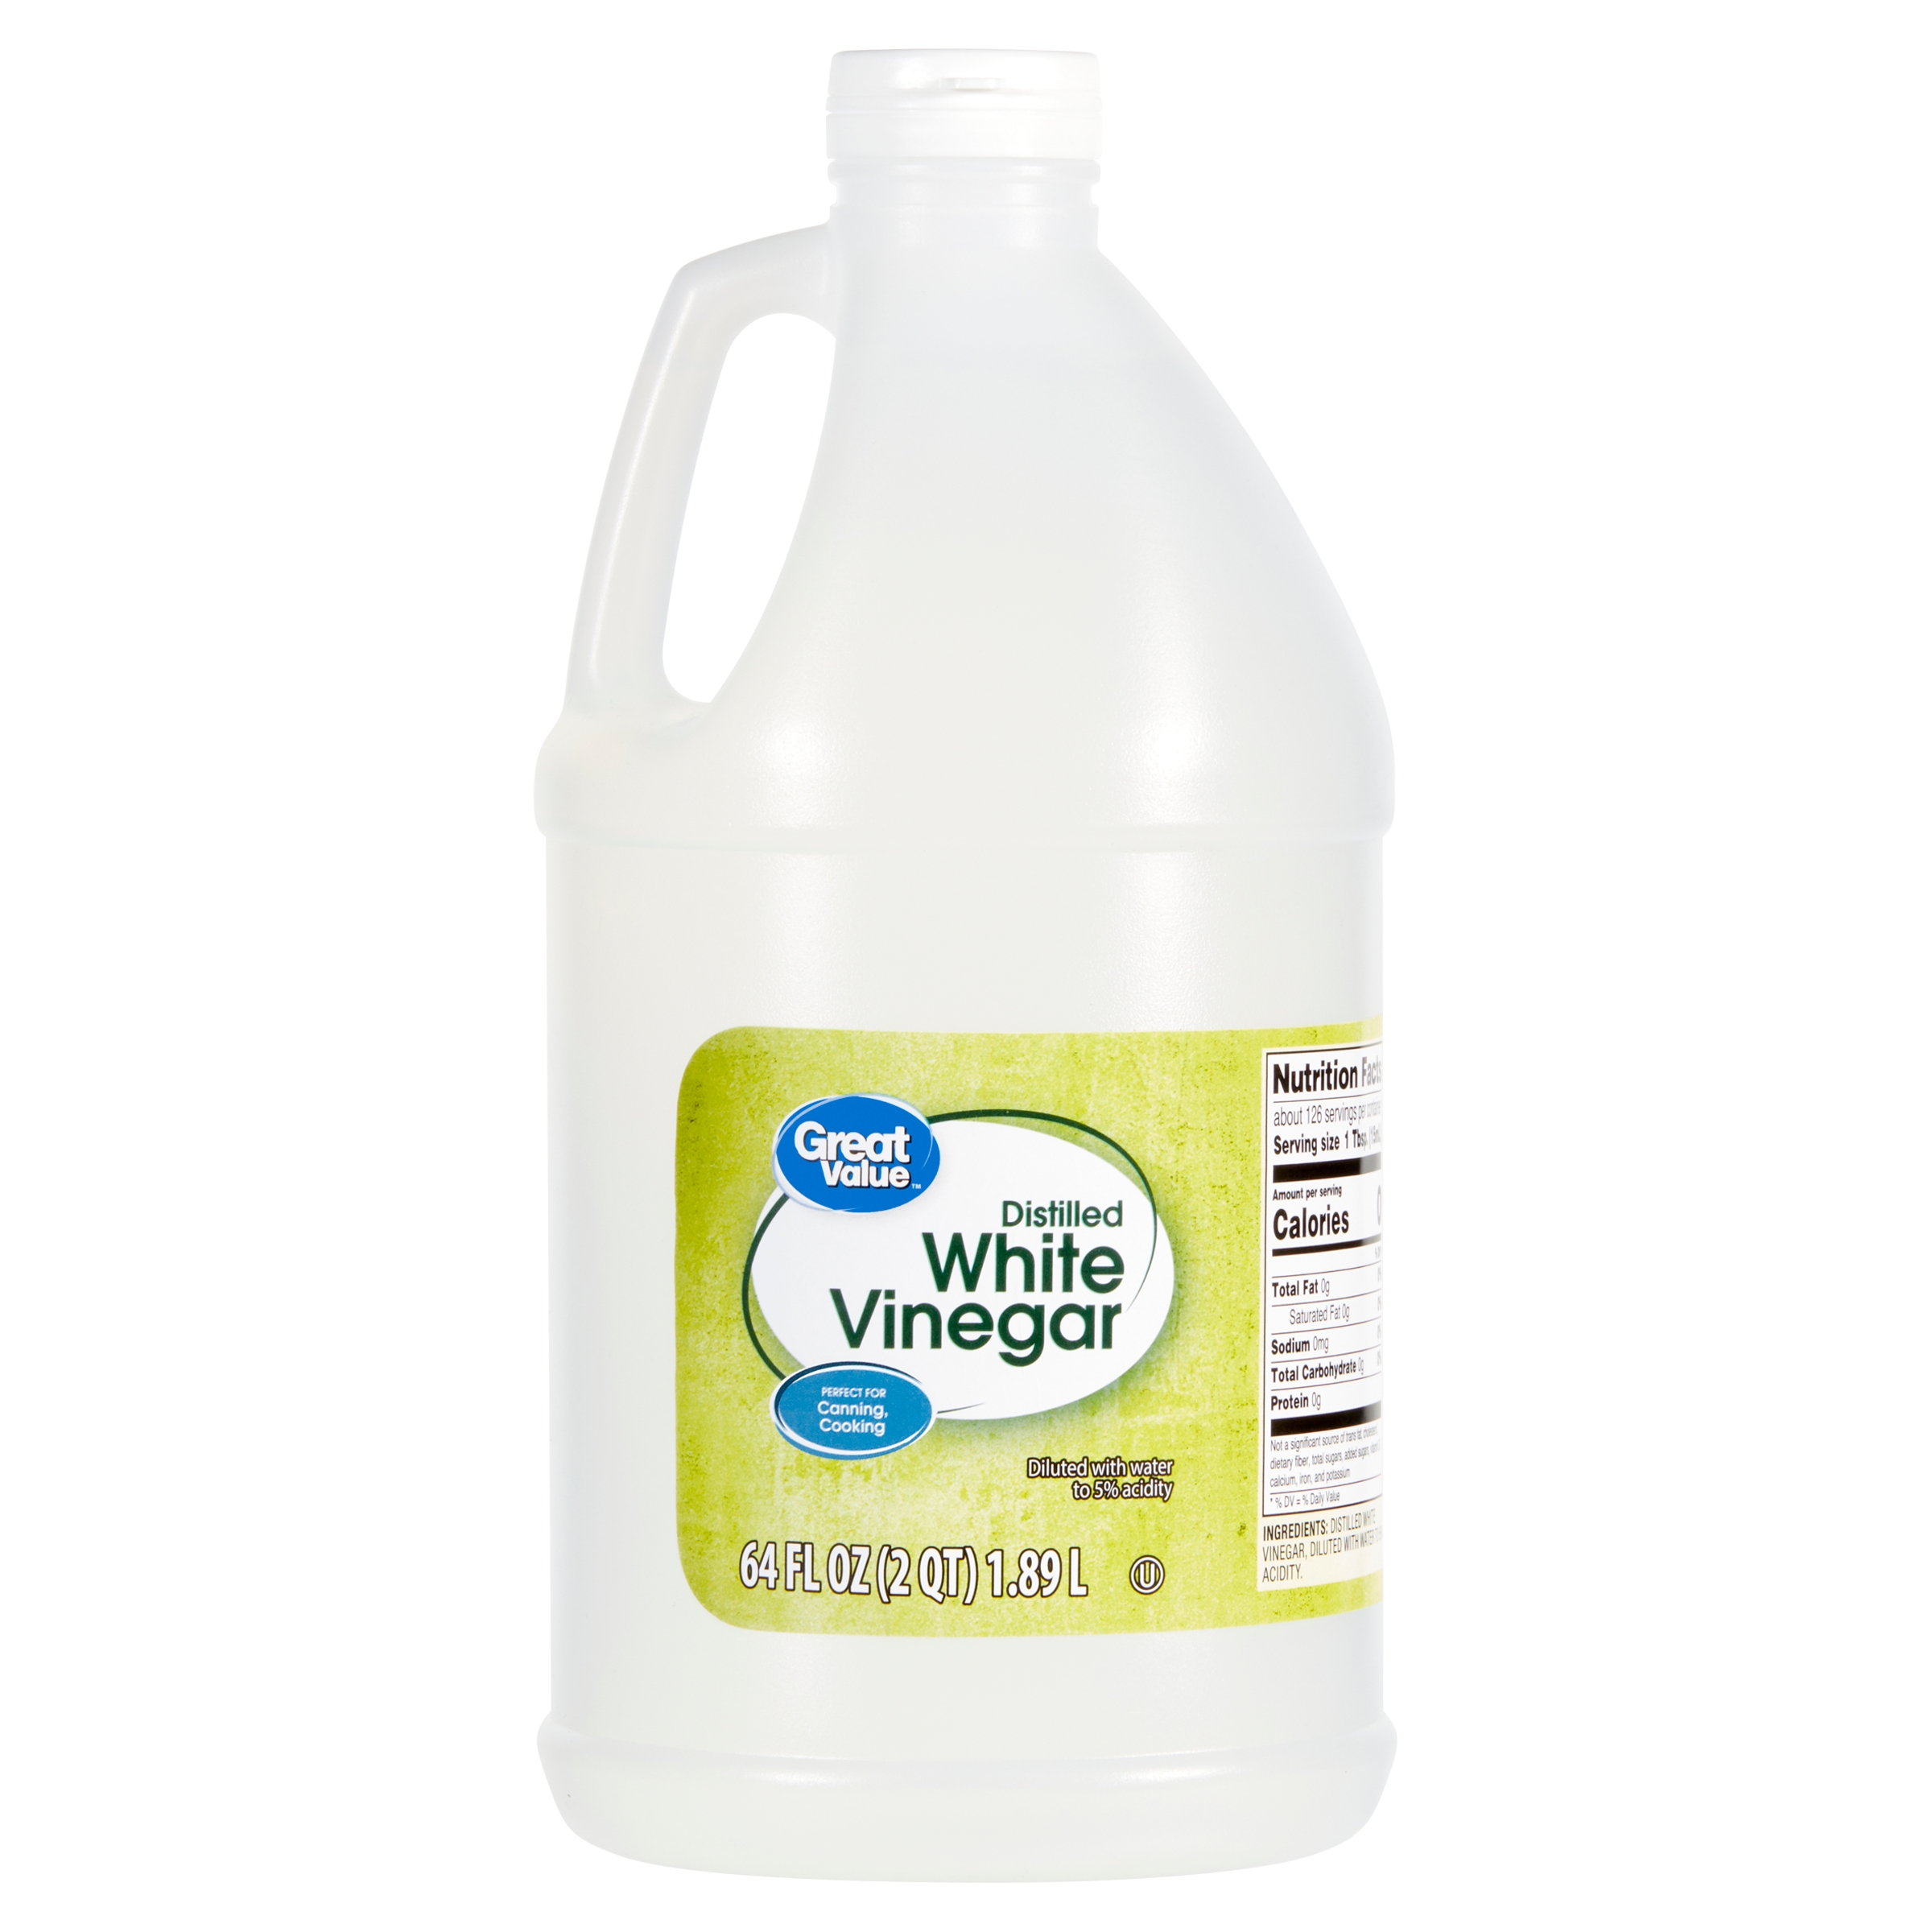 Great Value Distilled White Vinegar, 64 fl oz - image 1 of 7